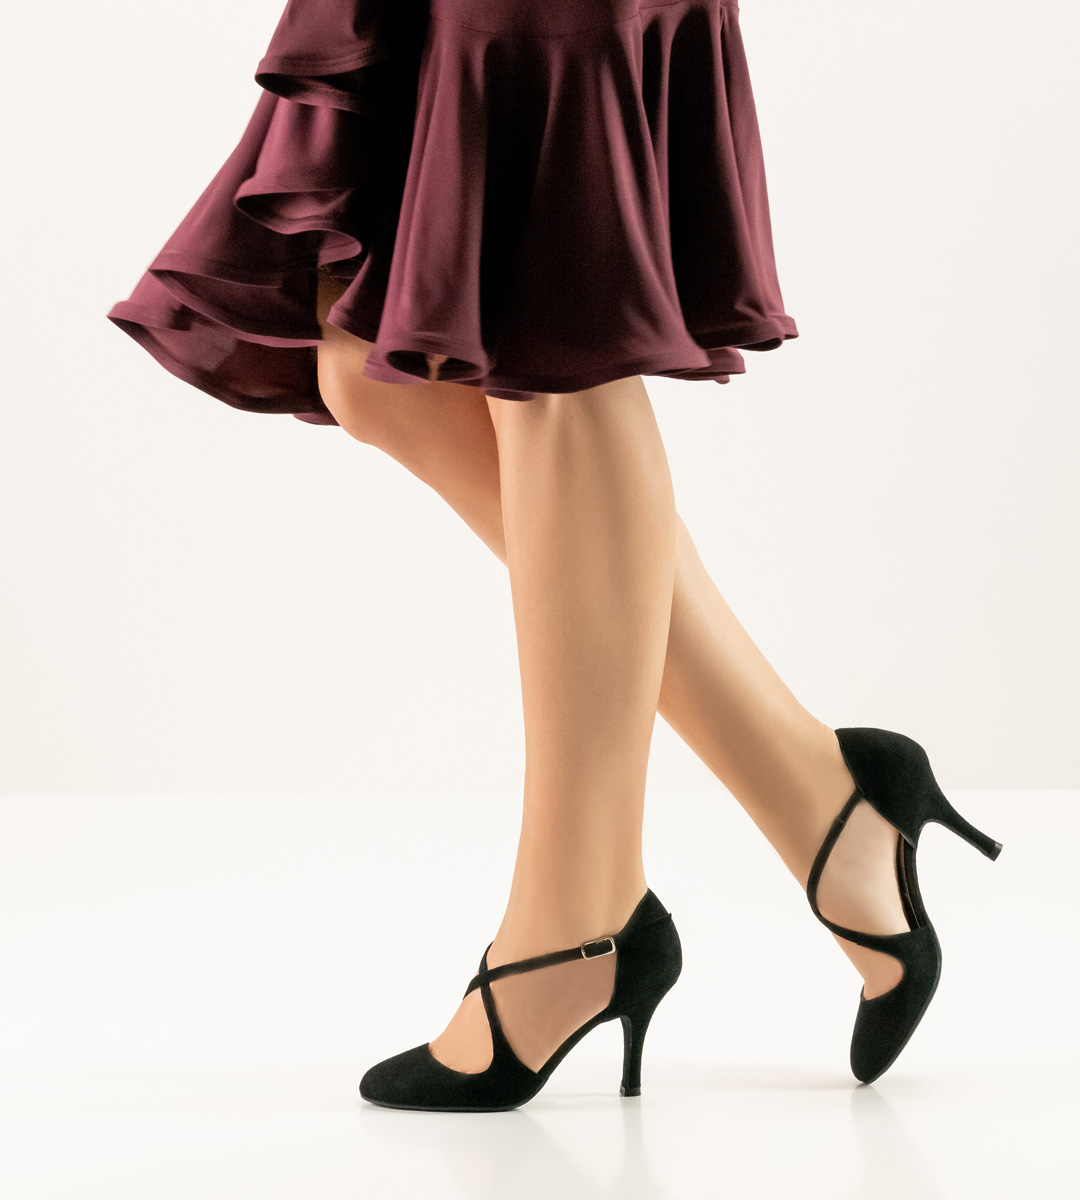 bordo coloured skirt in combination with Nueva Epoca ladies dance shoe in black